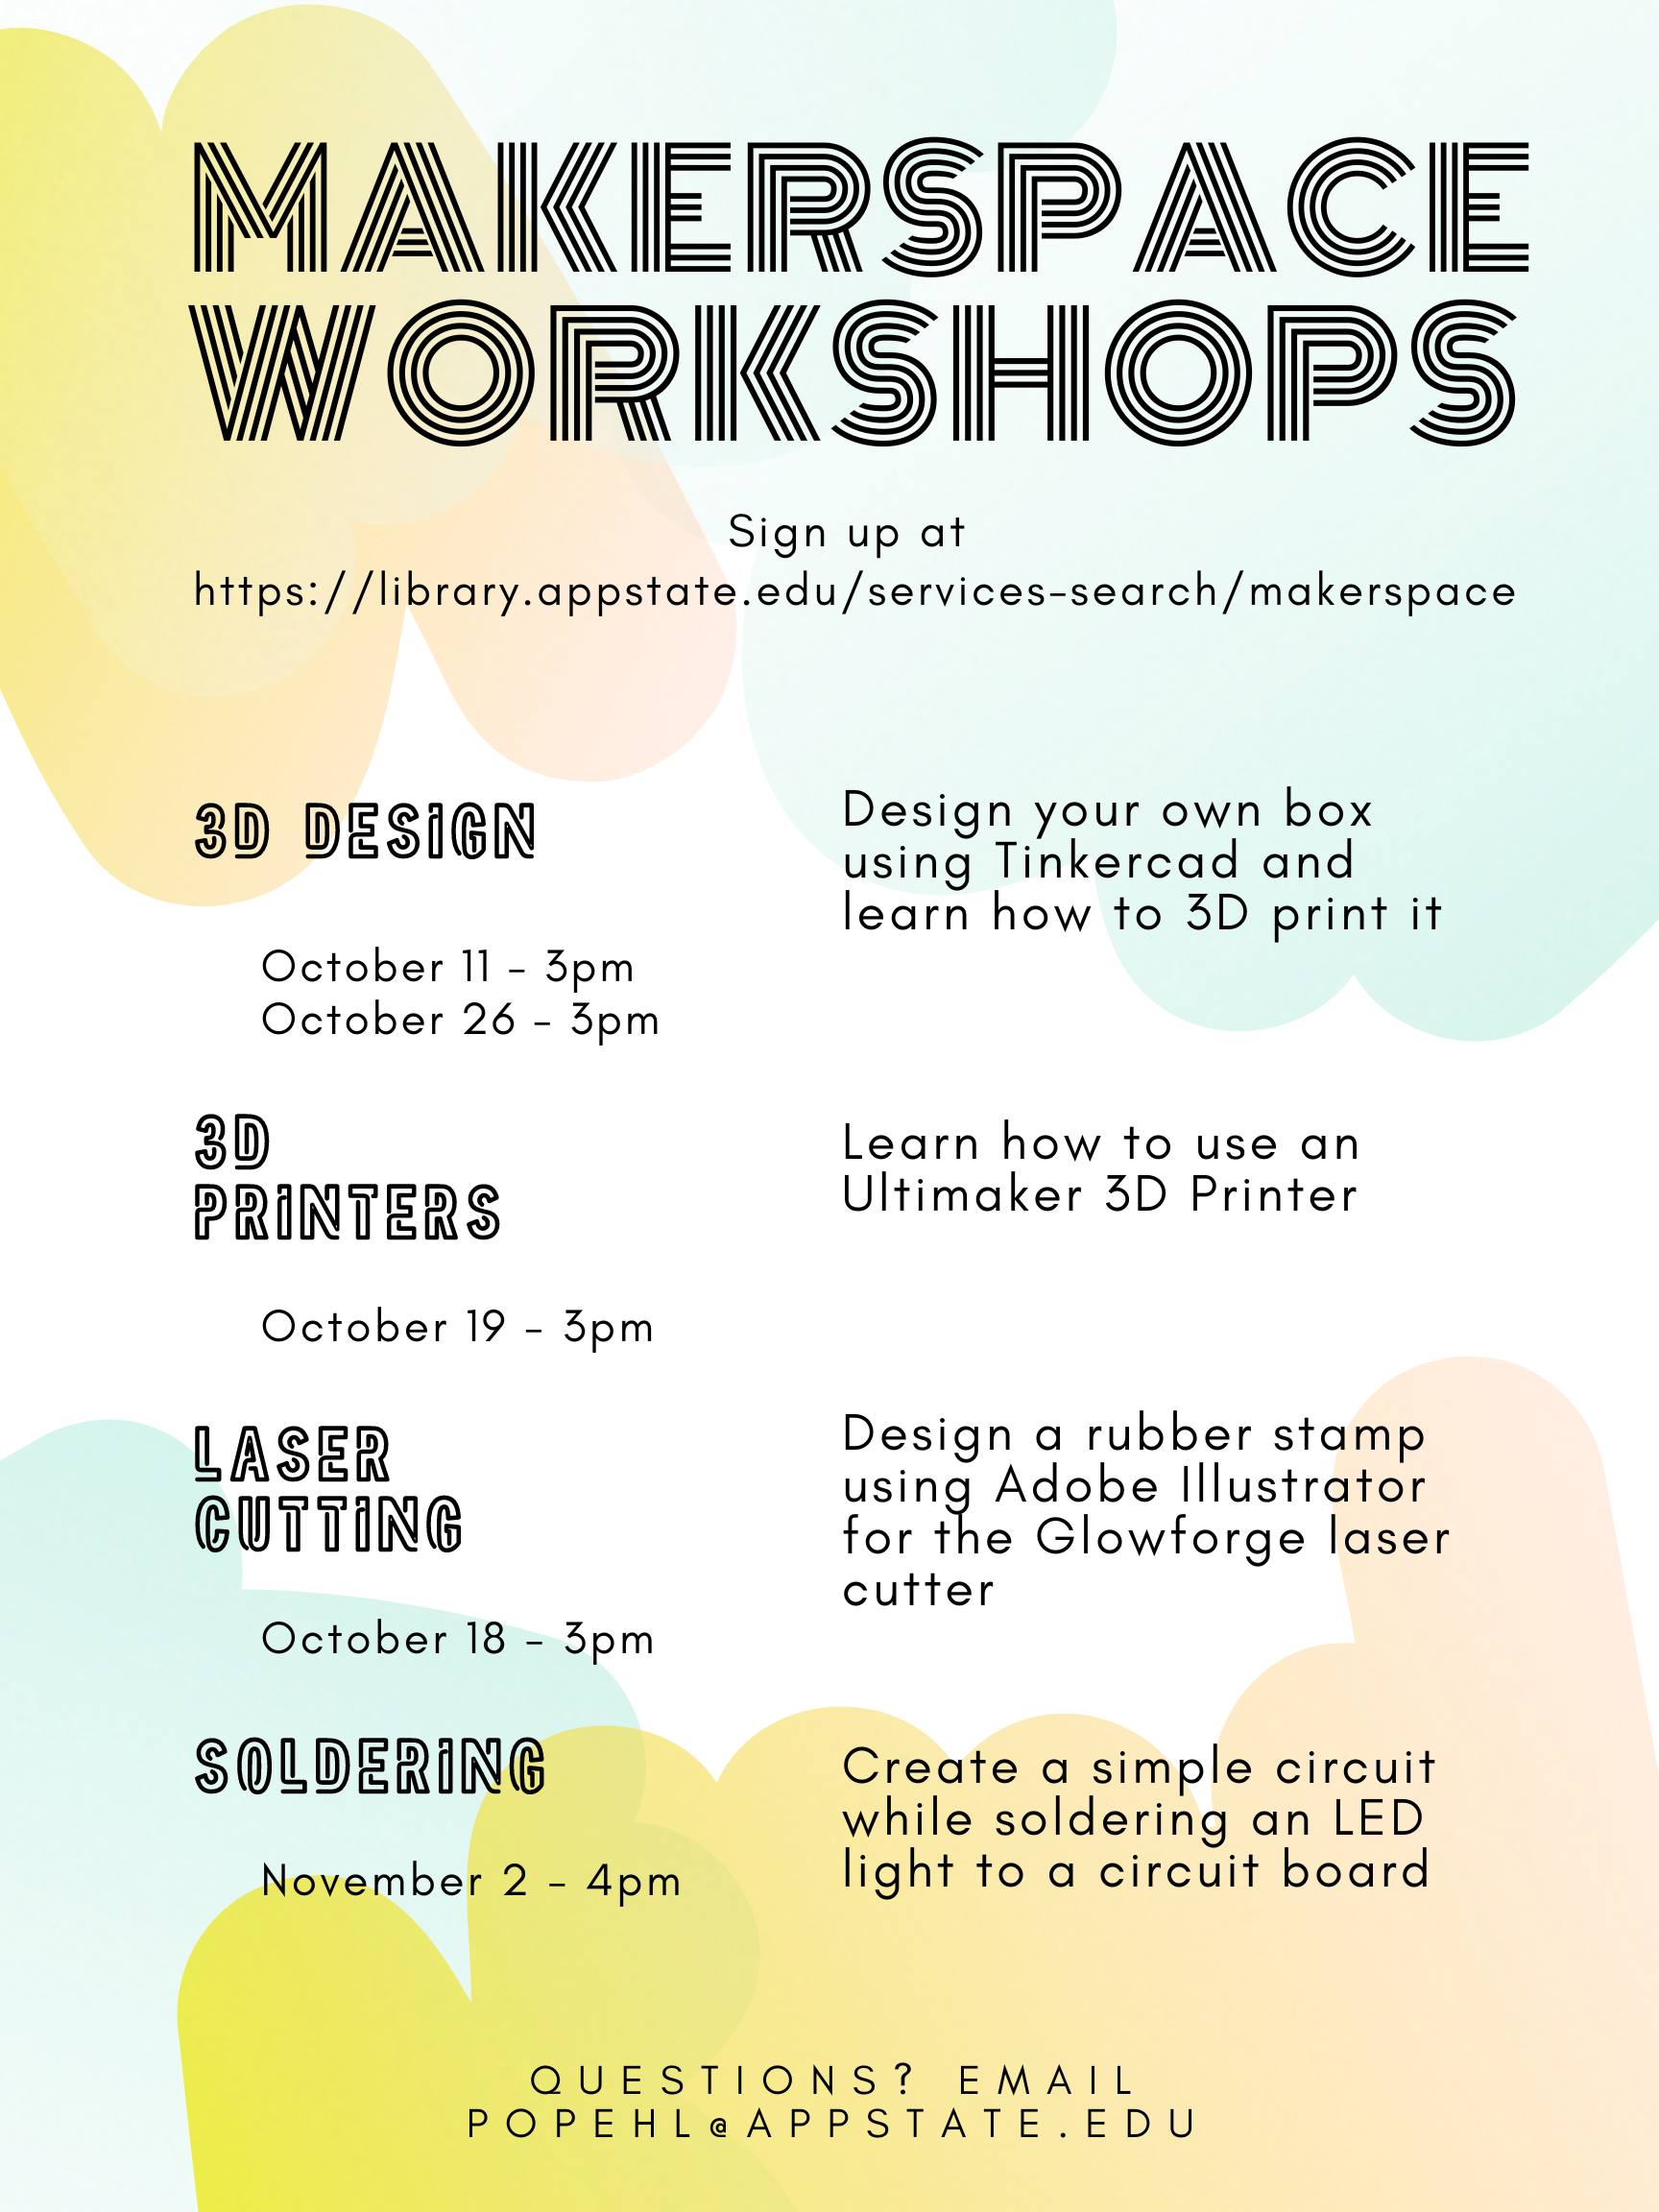 Makerspace workshops